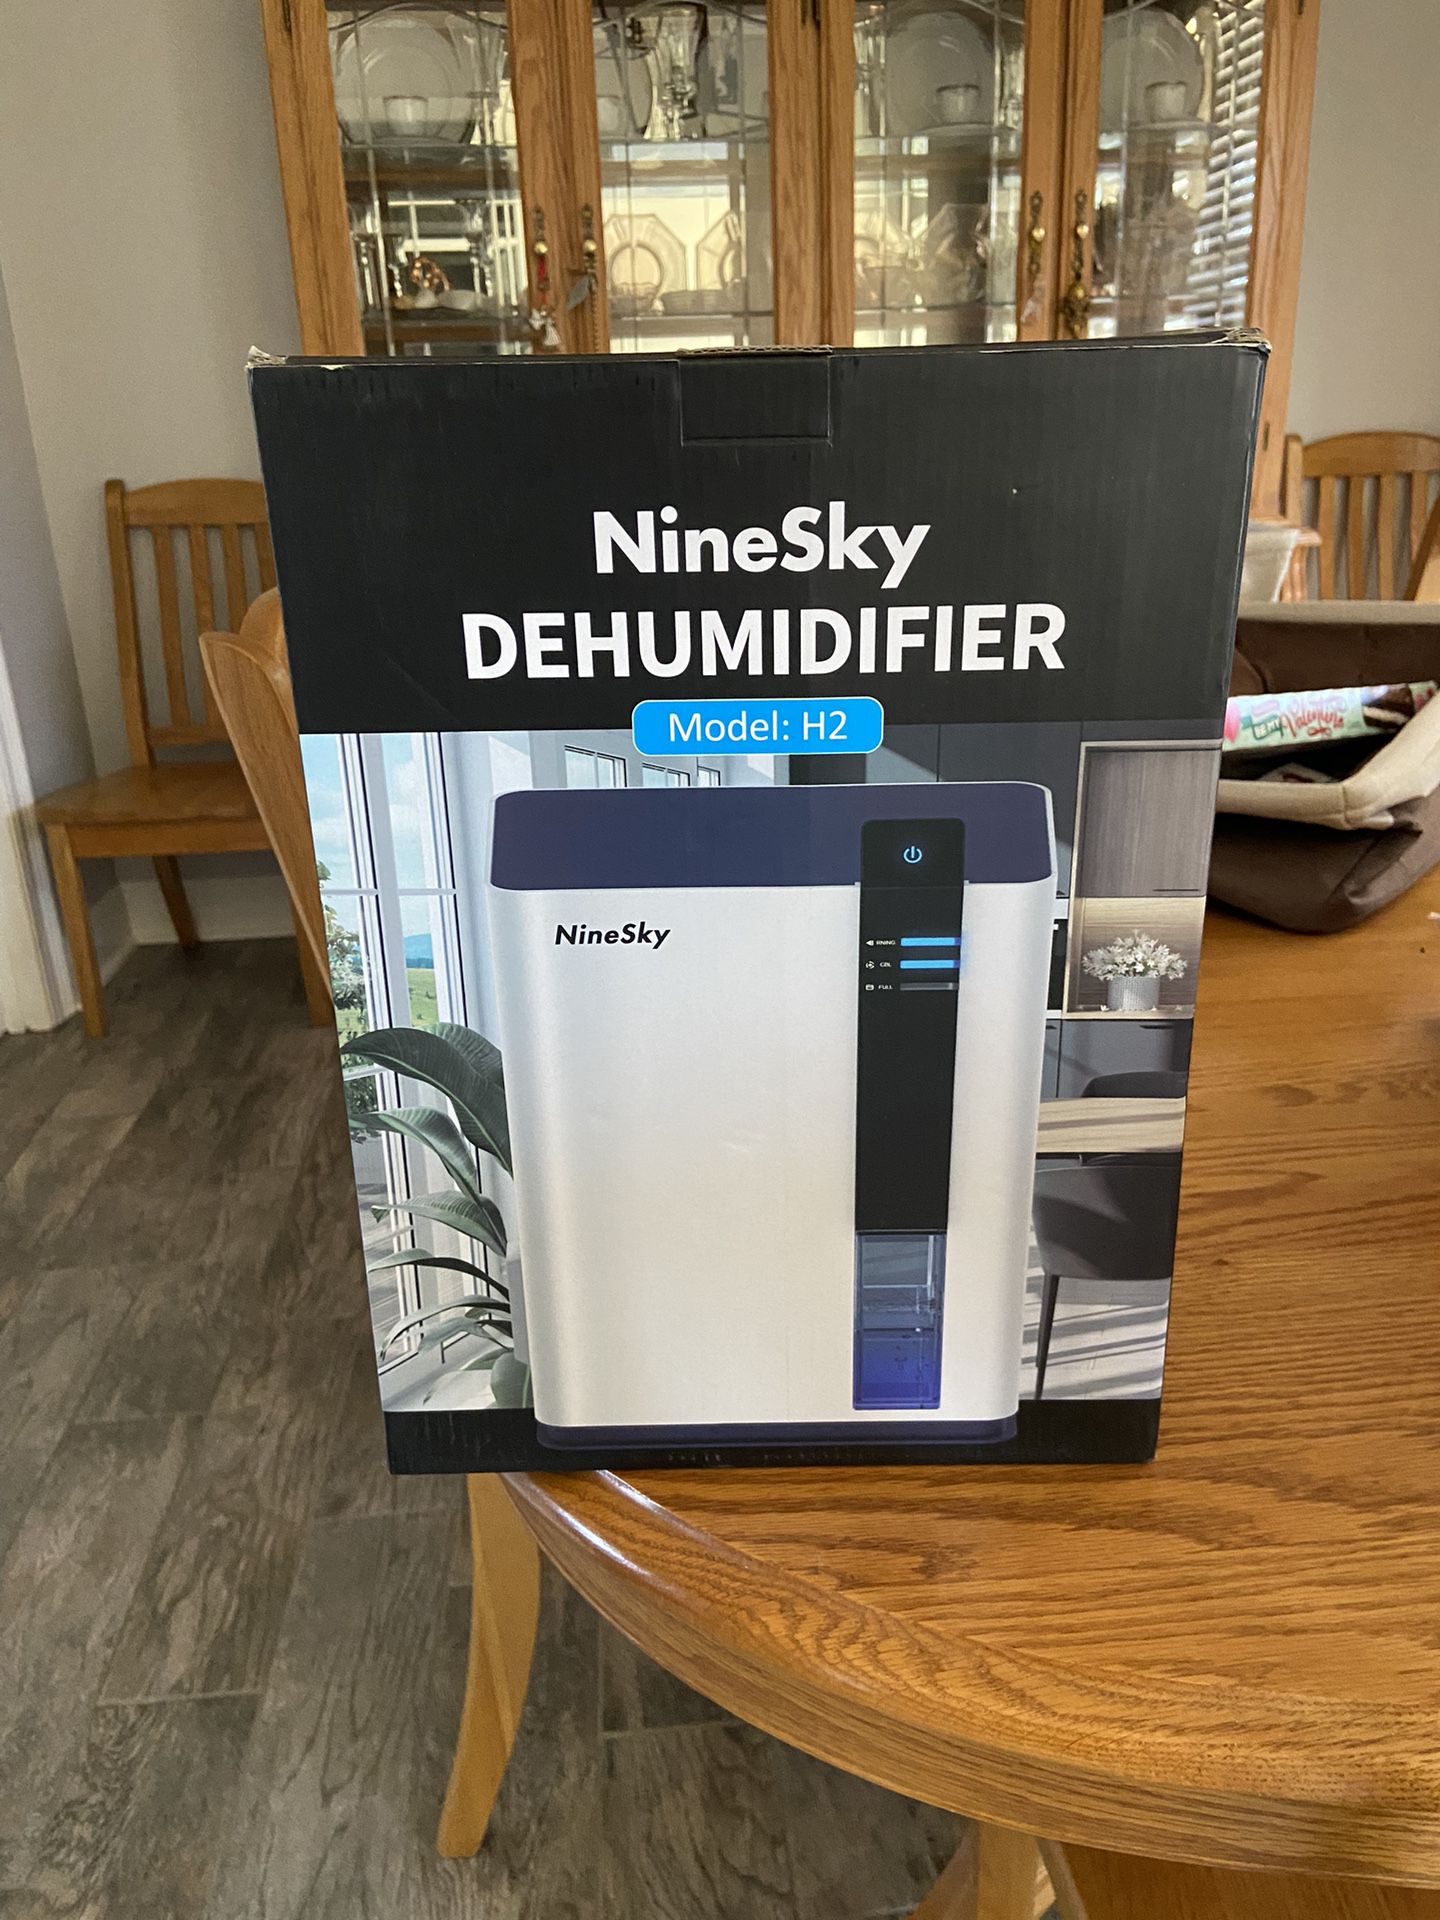 NineSky Dehumidifier for home/office